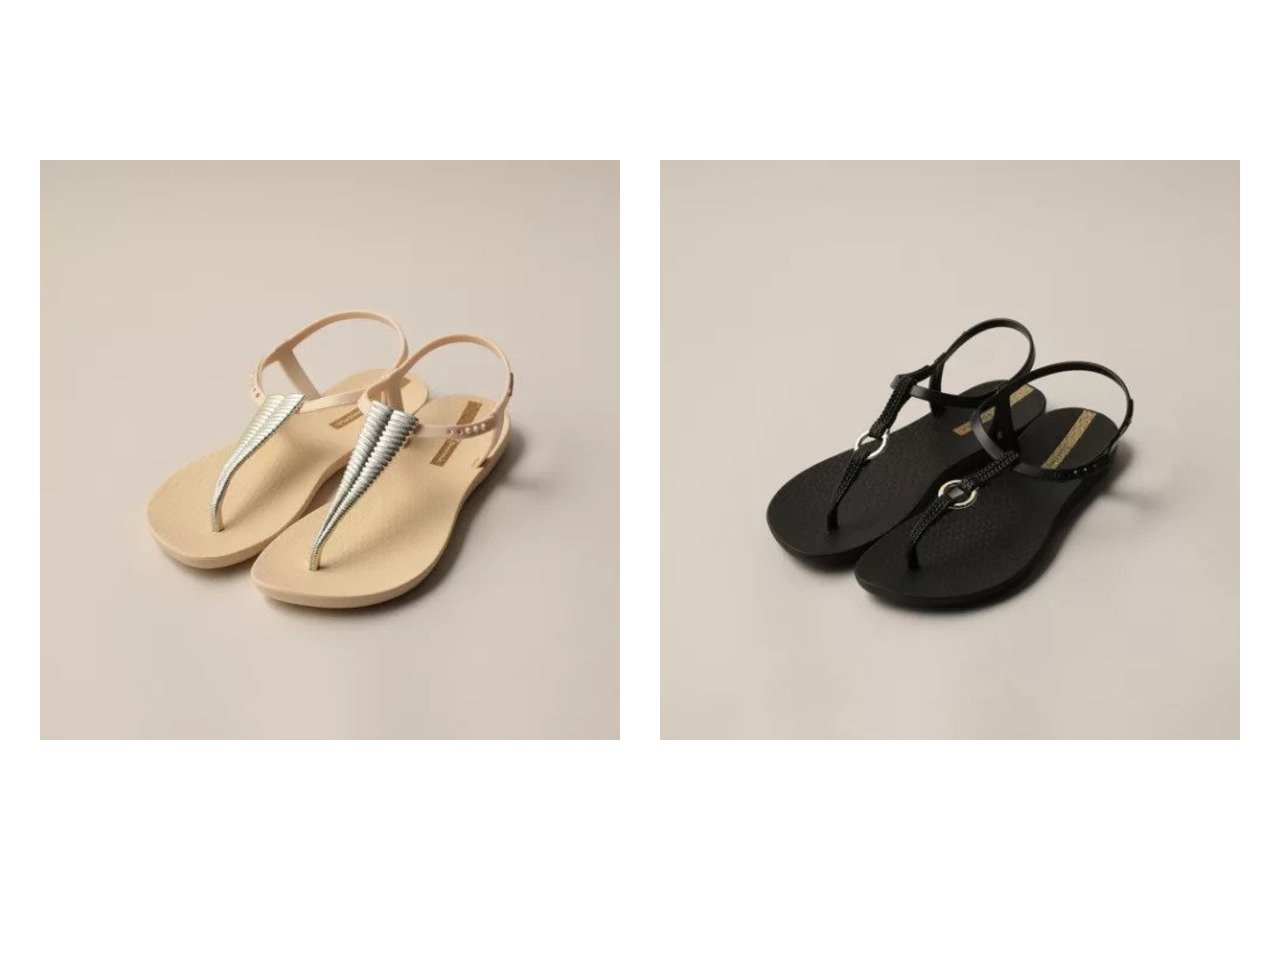 【Odette e Odile/オデット エ オディール】のCLASS GLAM III&CHARM VII SAND1 【シューズ・靴】おすすめ！人気、トレンド・レディースファッションの通販 おすすめで人気の流行・トレンド、ファッションの通販商品 インテリア・家具・メンズファッション・キッズファッション・レディースファッション・服の通販 founy(ファニー) https://founy.com/ ファッション Fashion レディースファッション WOMEN おすすめ Recommend サンダル シューズ シンプル ビーチ モチーフ 人気 夏 Summer |ID:crp329100000060157